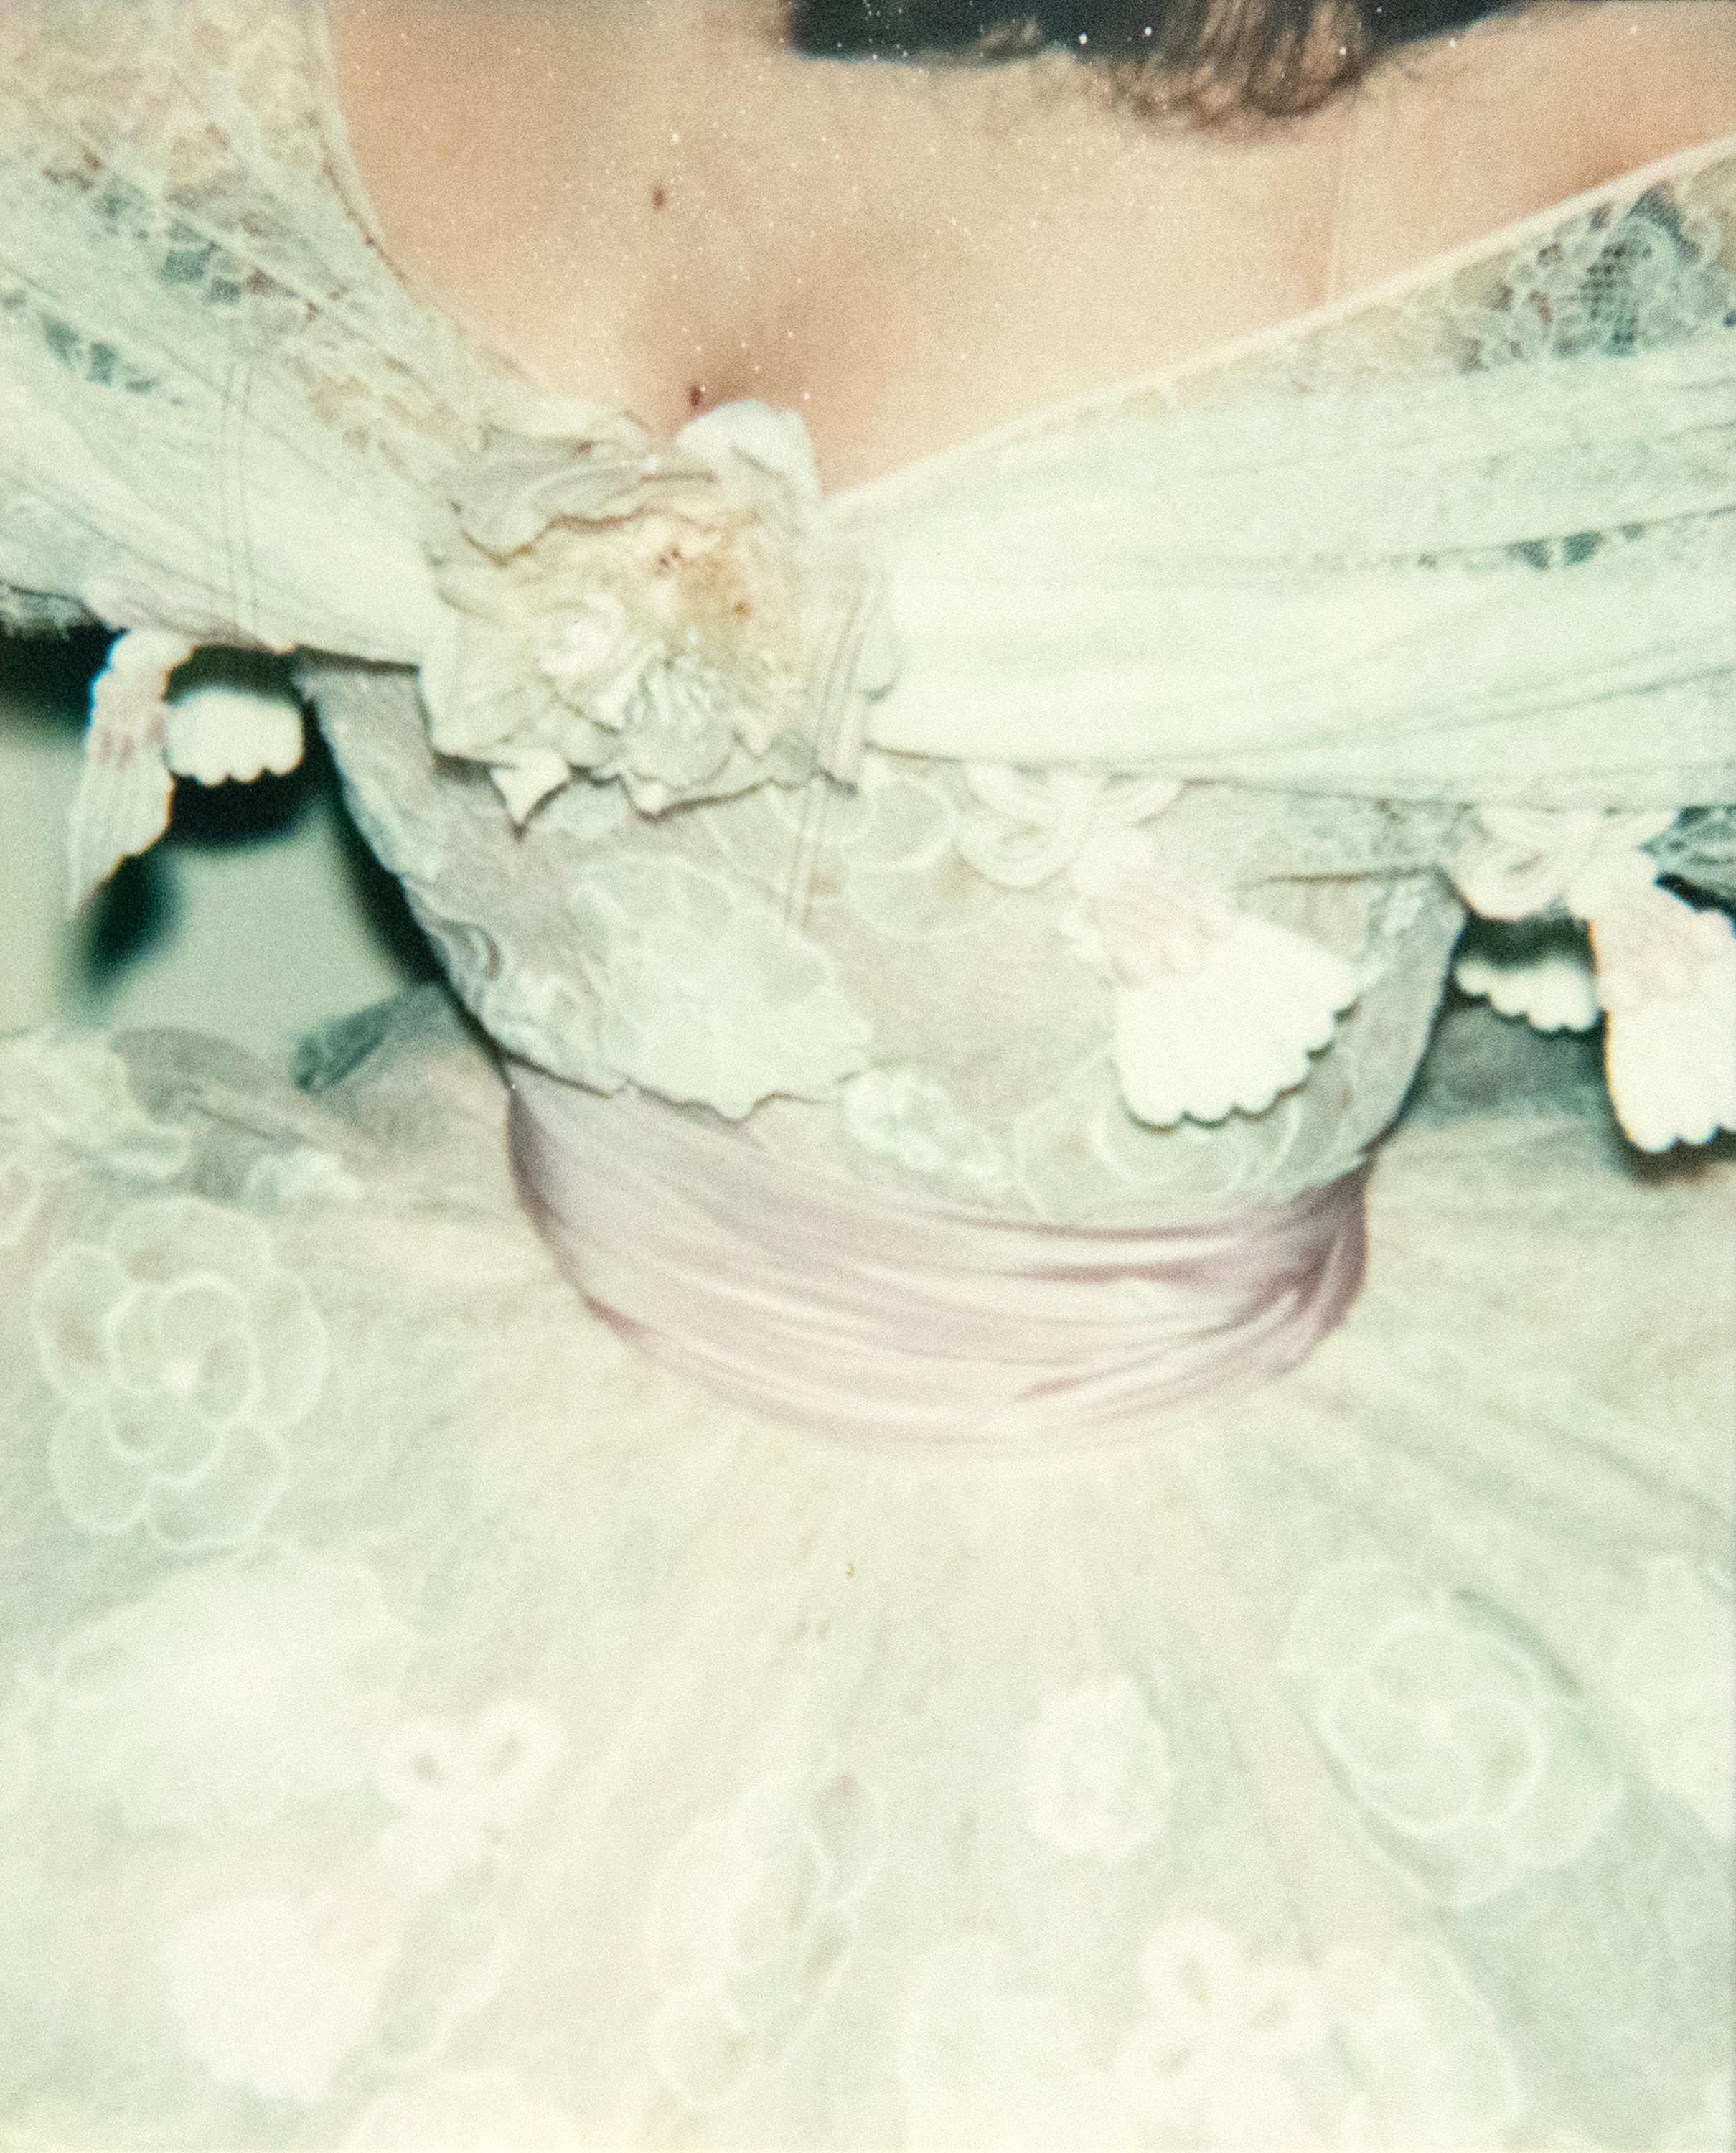 Laola Dominguin-Kleid (Pop-Art), Photograph, von Andy Warhol